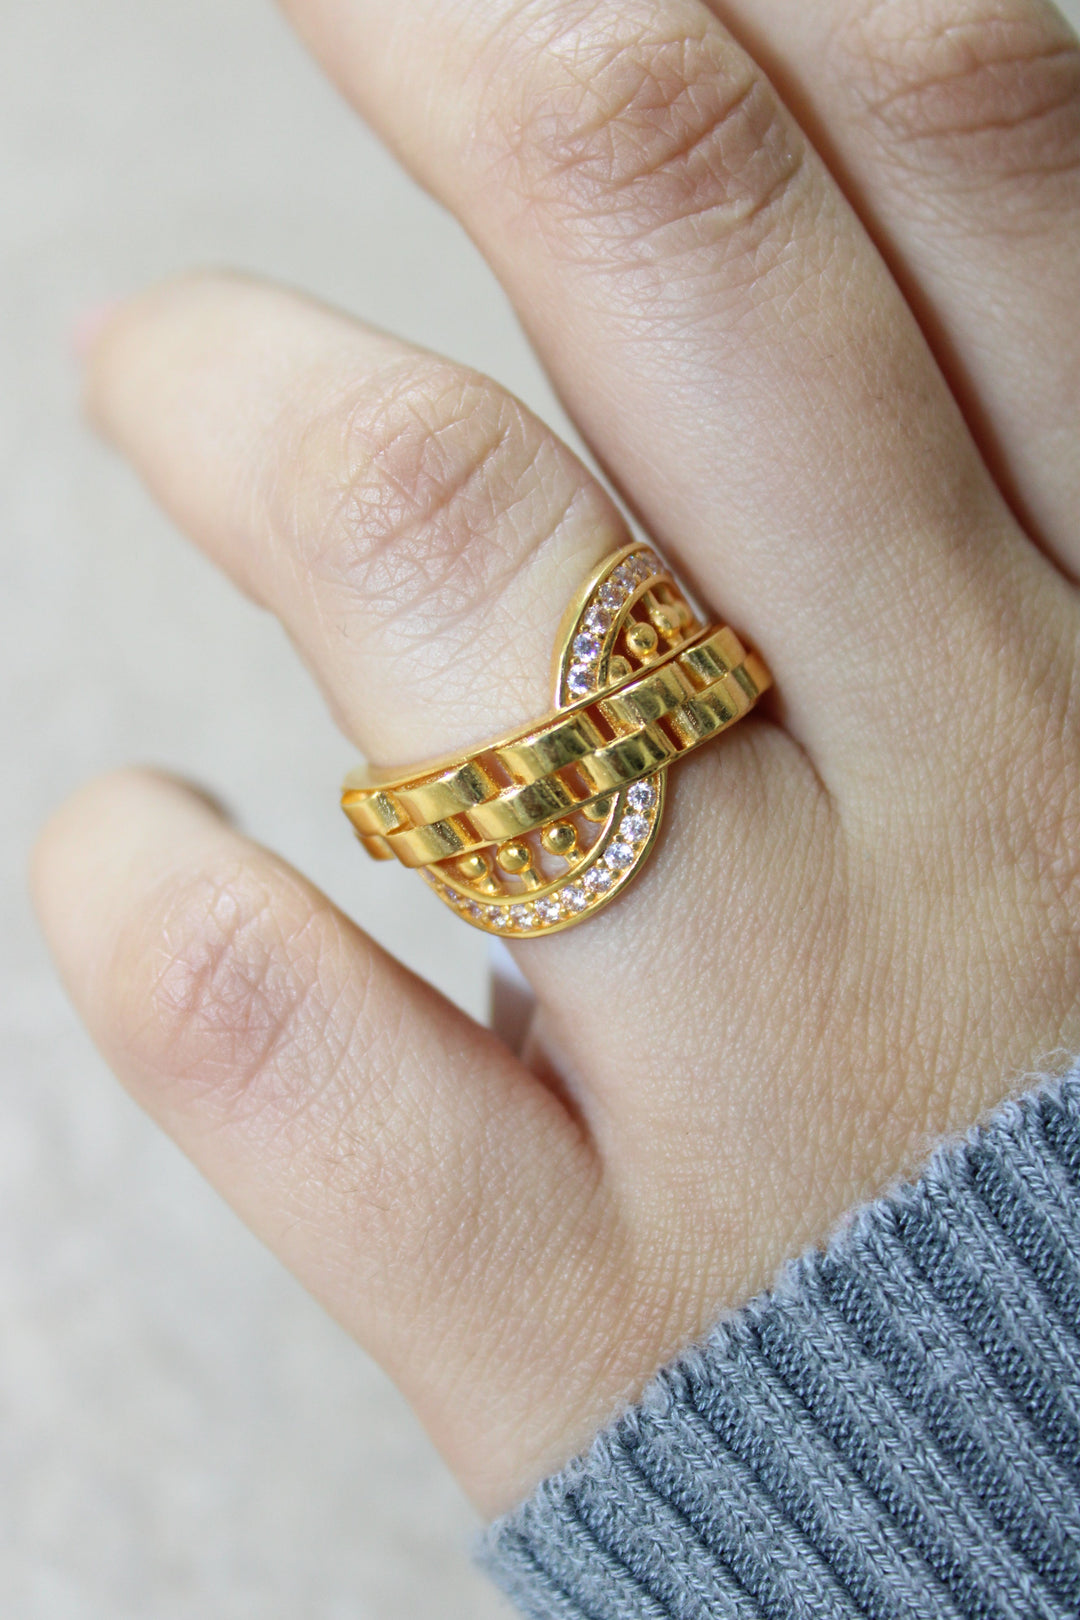 21K Gold Turkish Zirconia Ring by Saeed Jewelry - Image 1